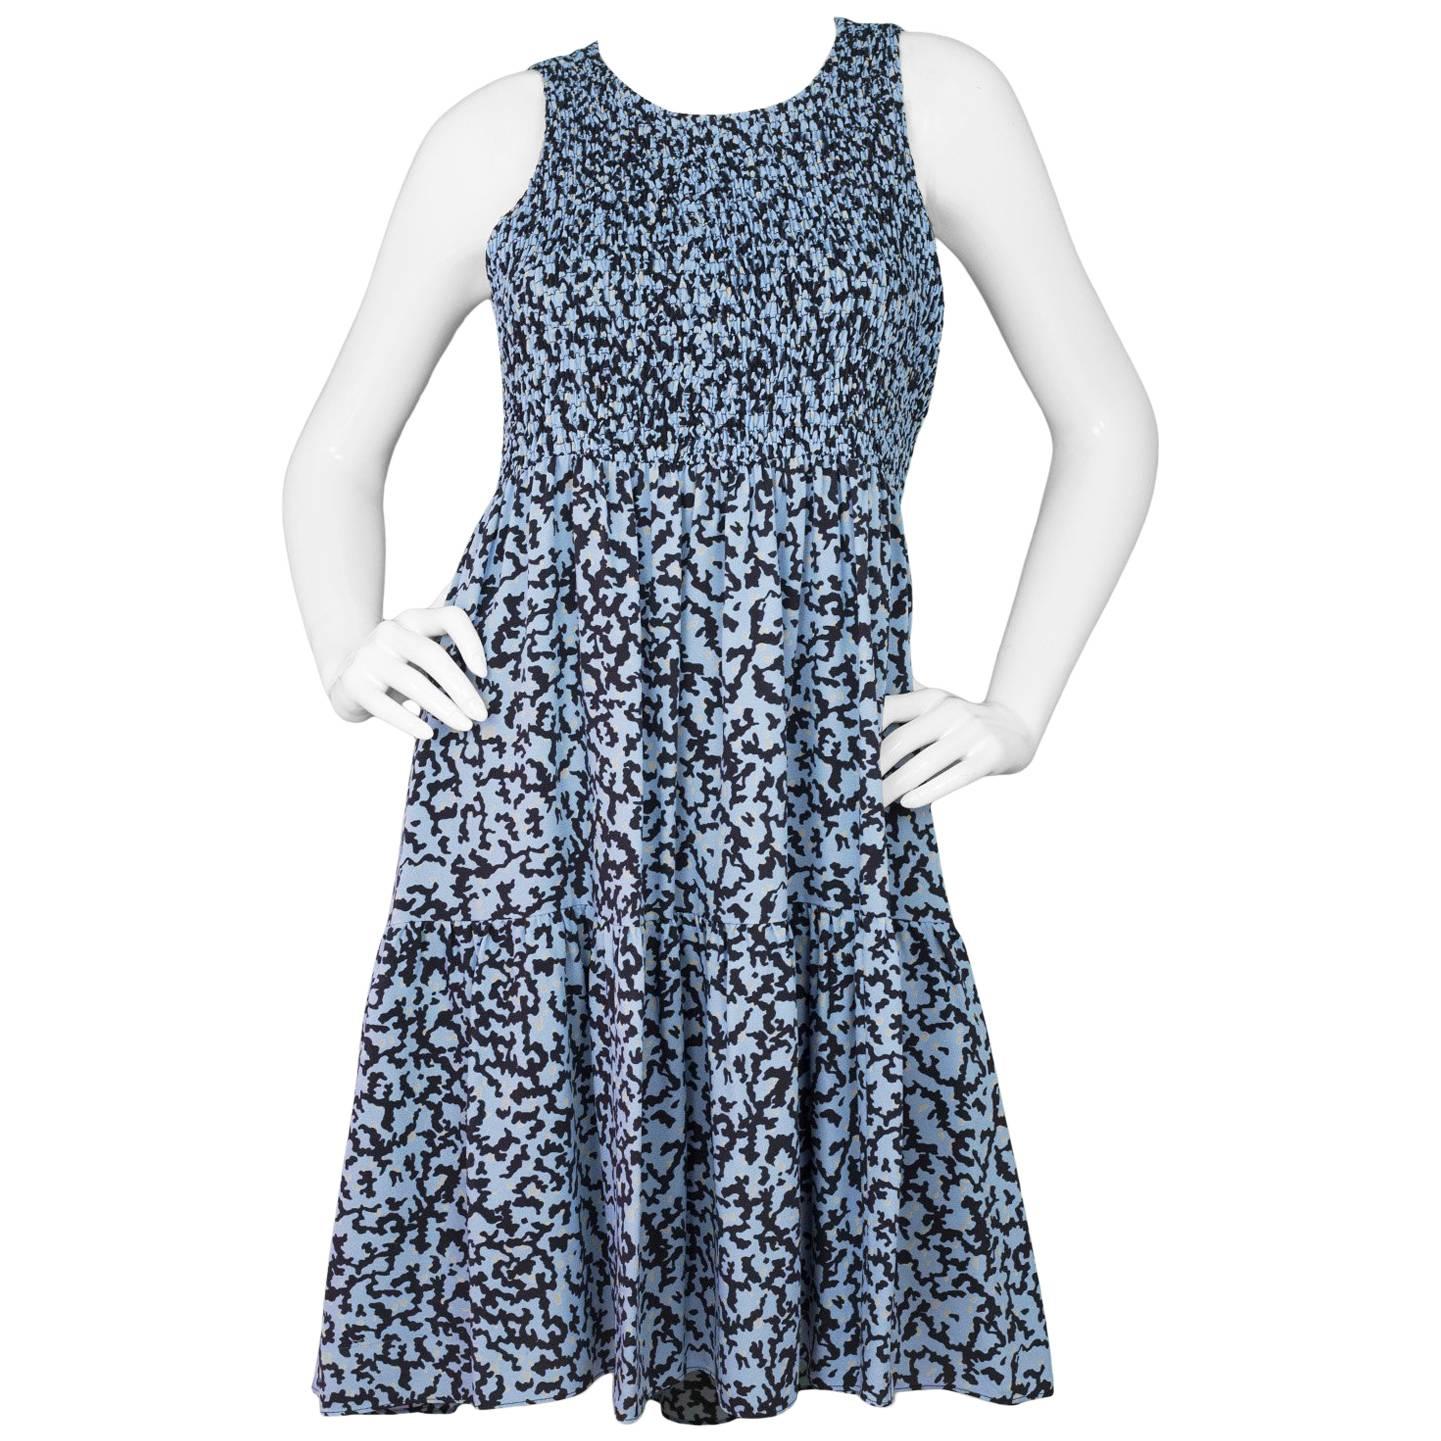 Proenza Schouler Blue Floral Print Silk Dress sz US4